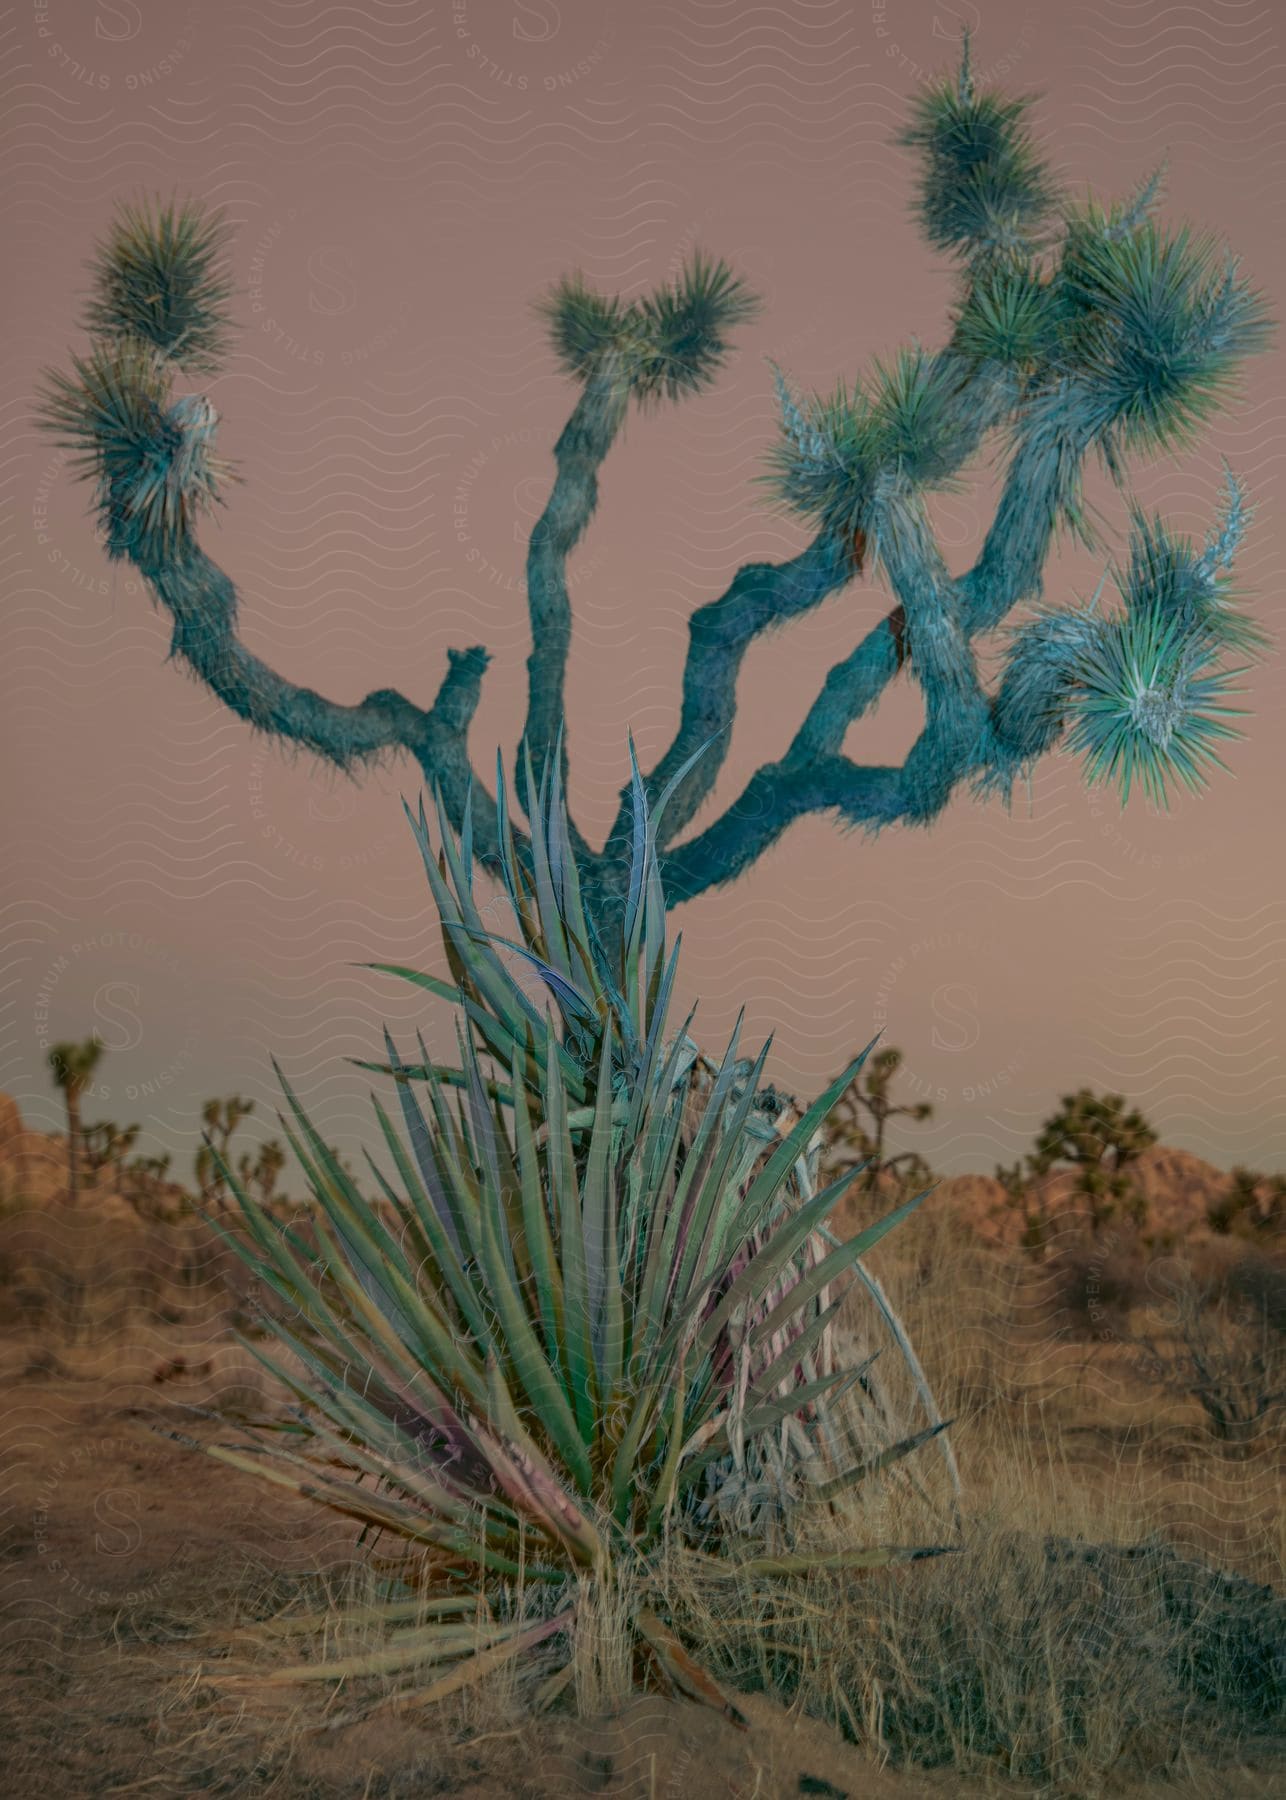 A cactus resembling a tree in a desert landscape